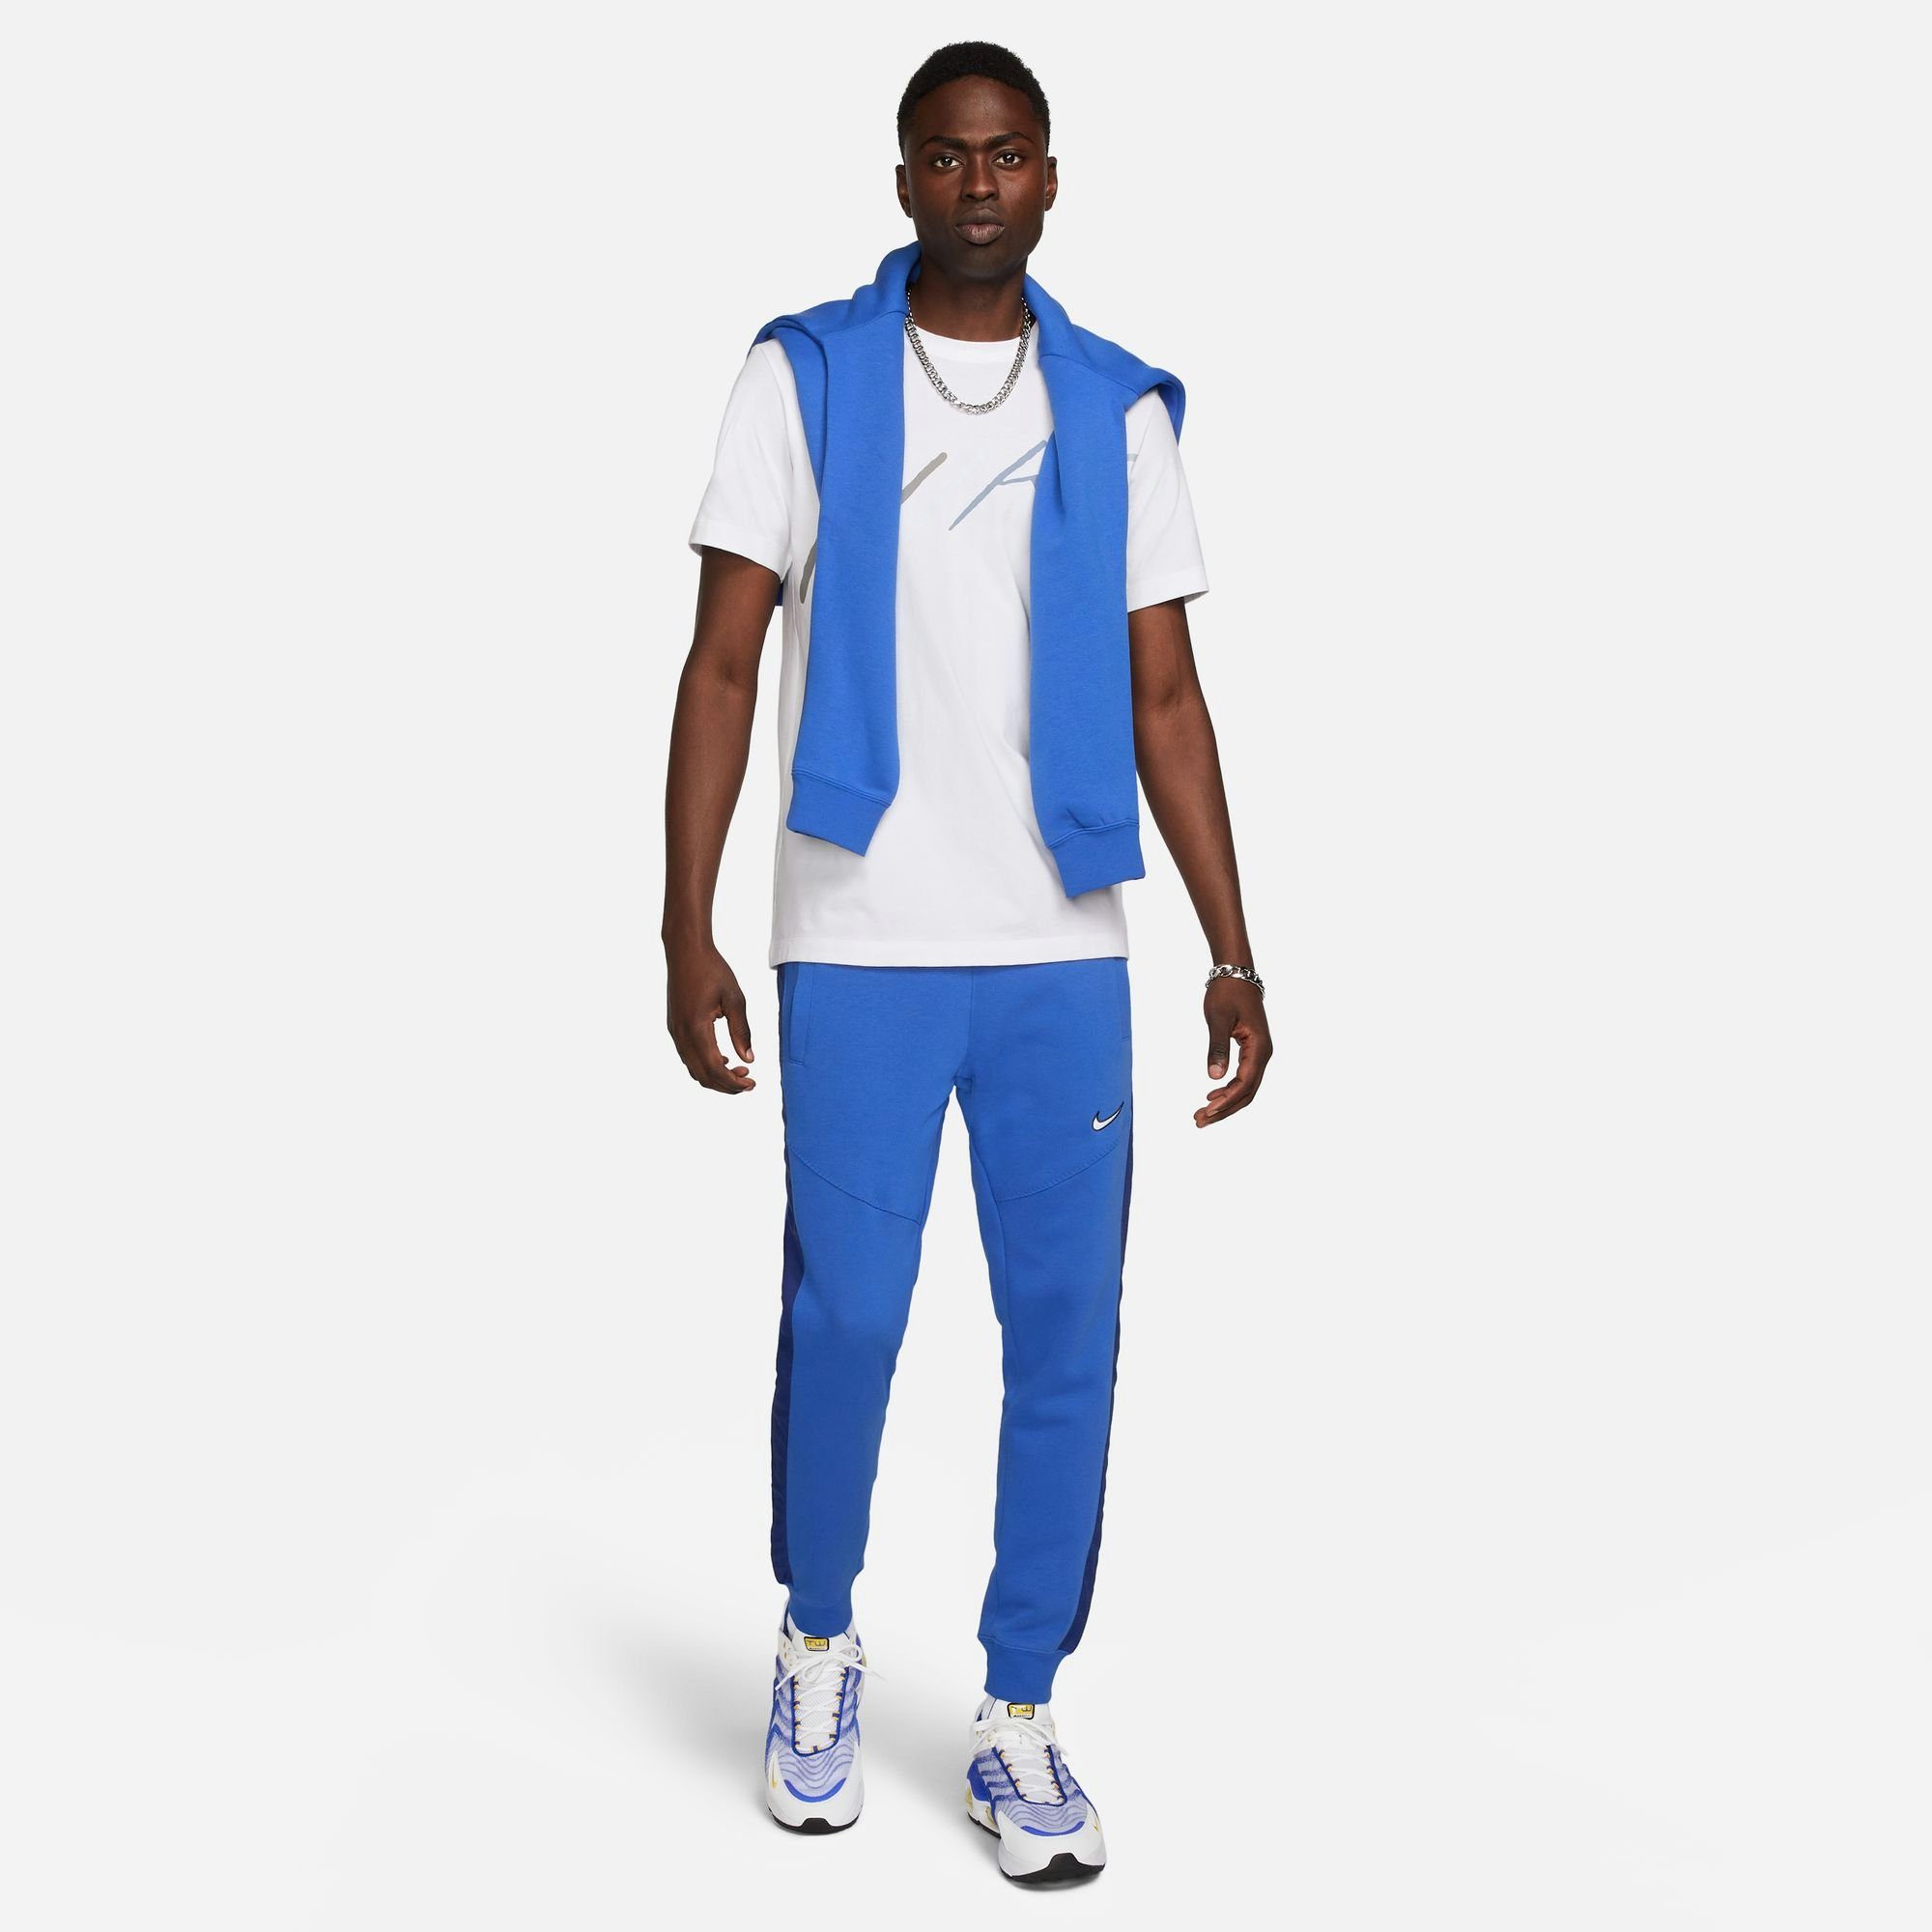 Nike BB M ROYAL/DEEP GAME JOGGER Sportswear NSW Jogginghose BLUE FLC SP ROYAL